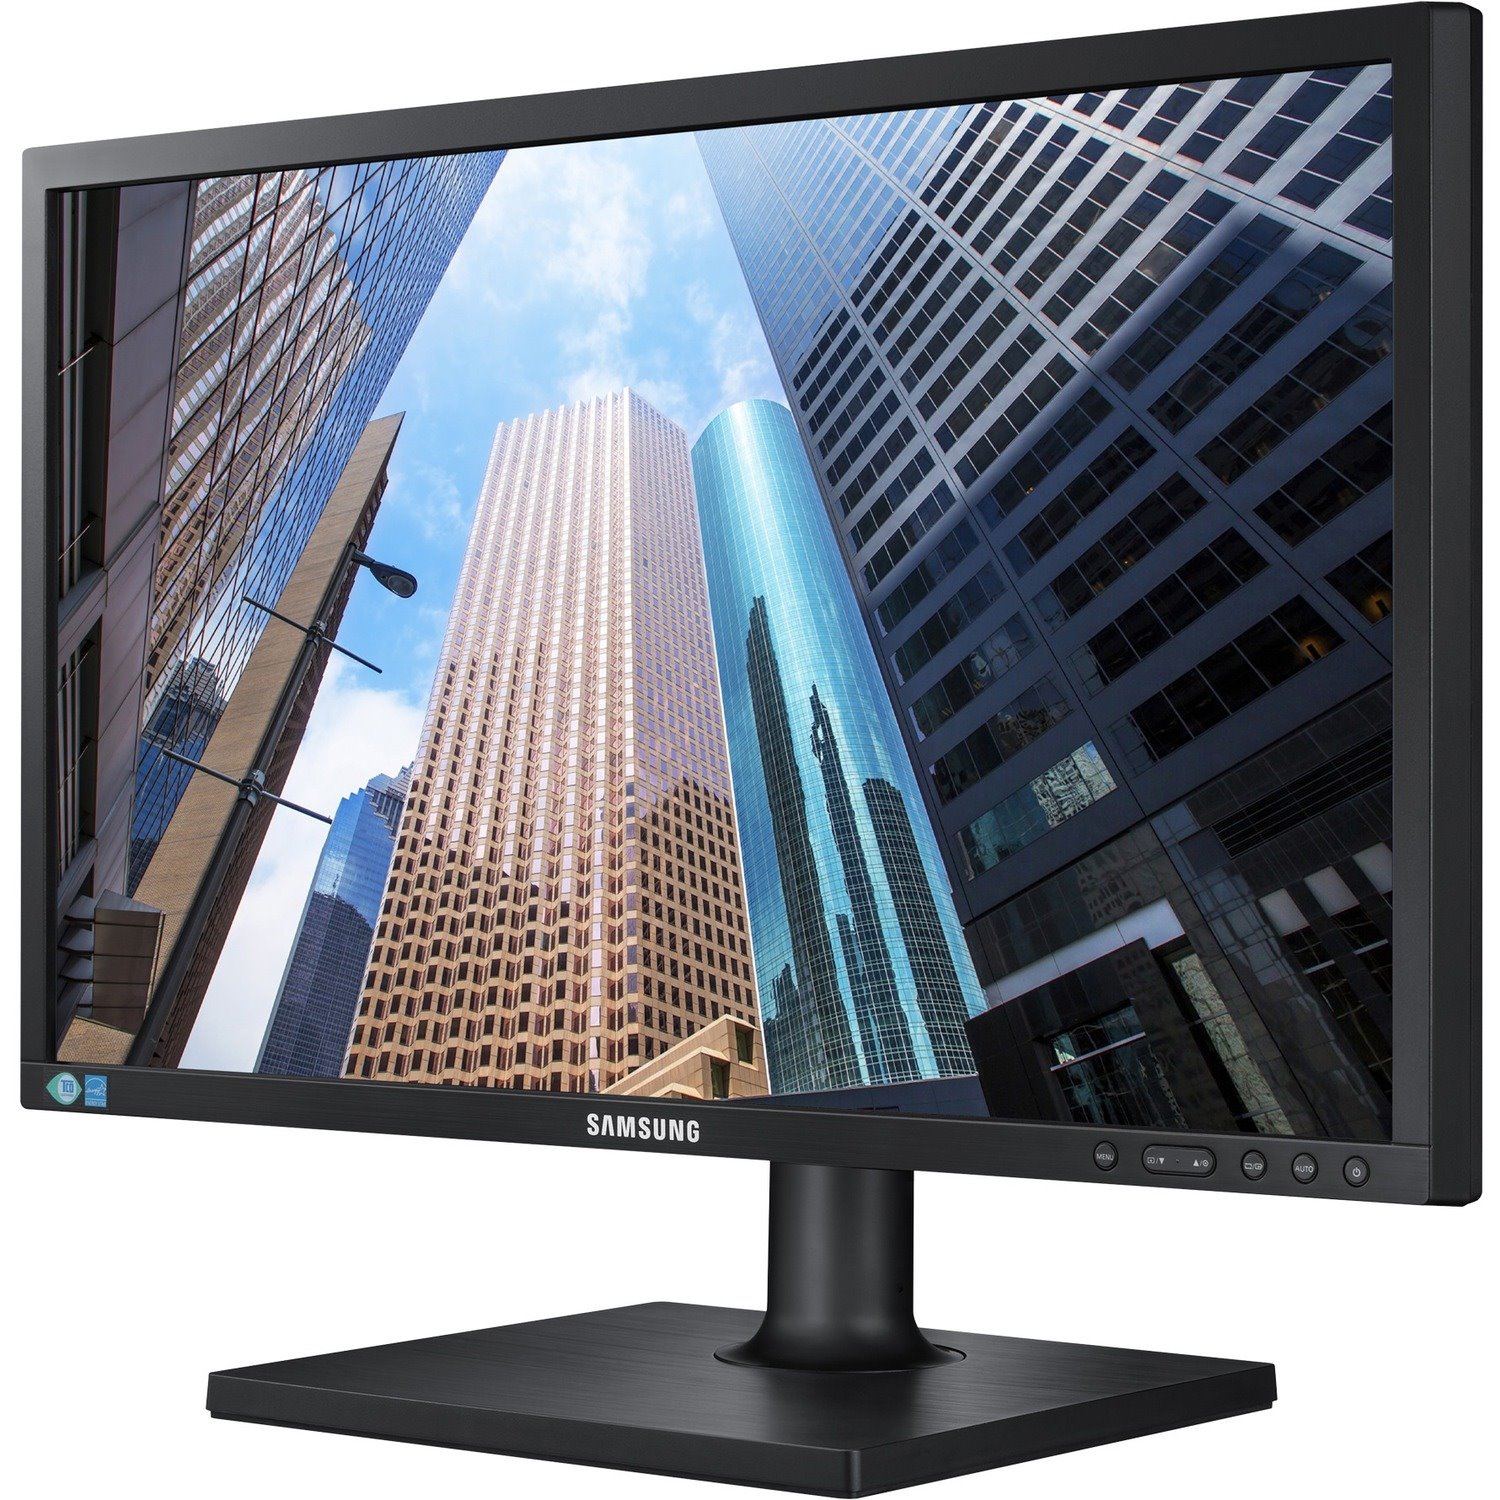 Samsung S24E450D 24" Full HD LED LCD Monitor - 16:9 - Black